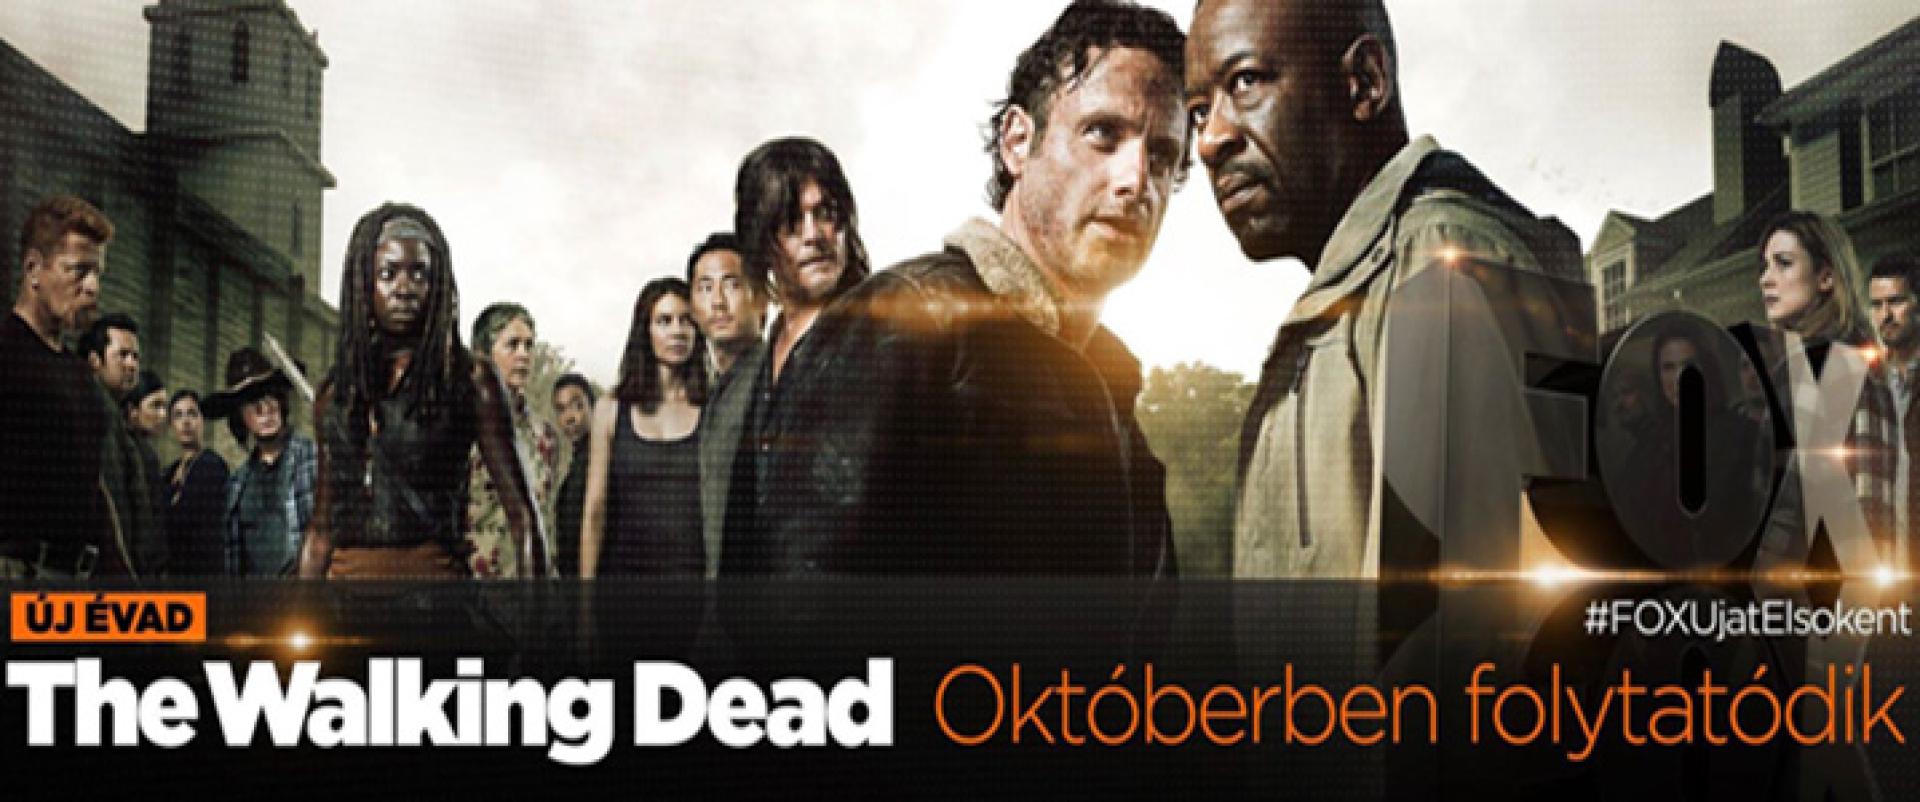 The Walking Dead, 6. évad: képhorda